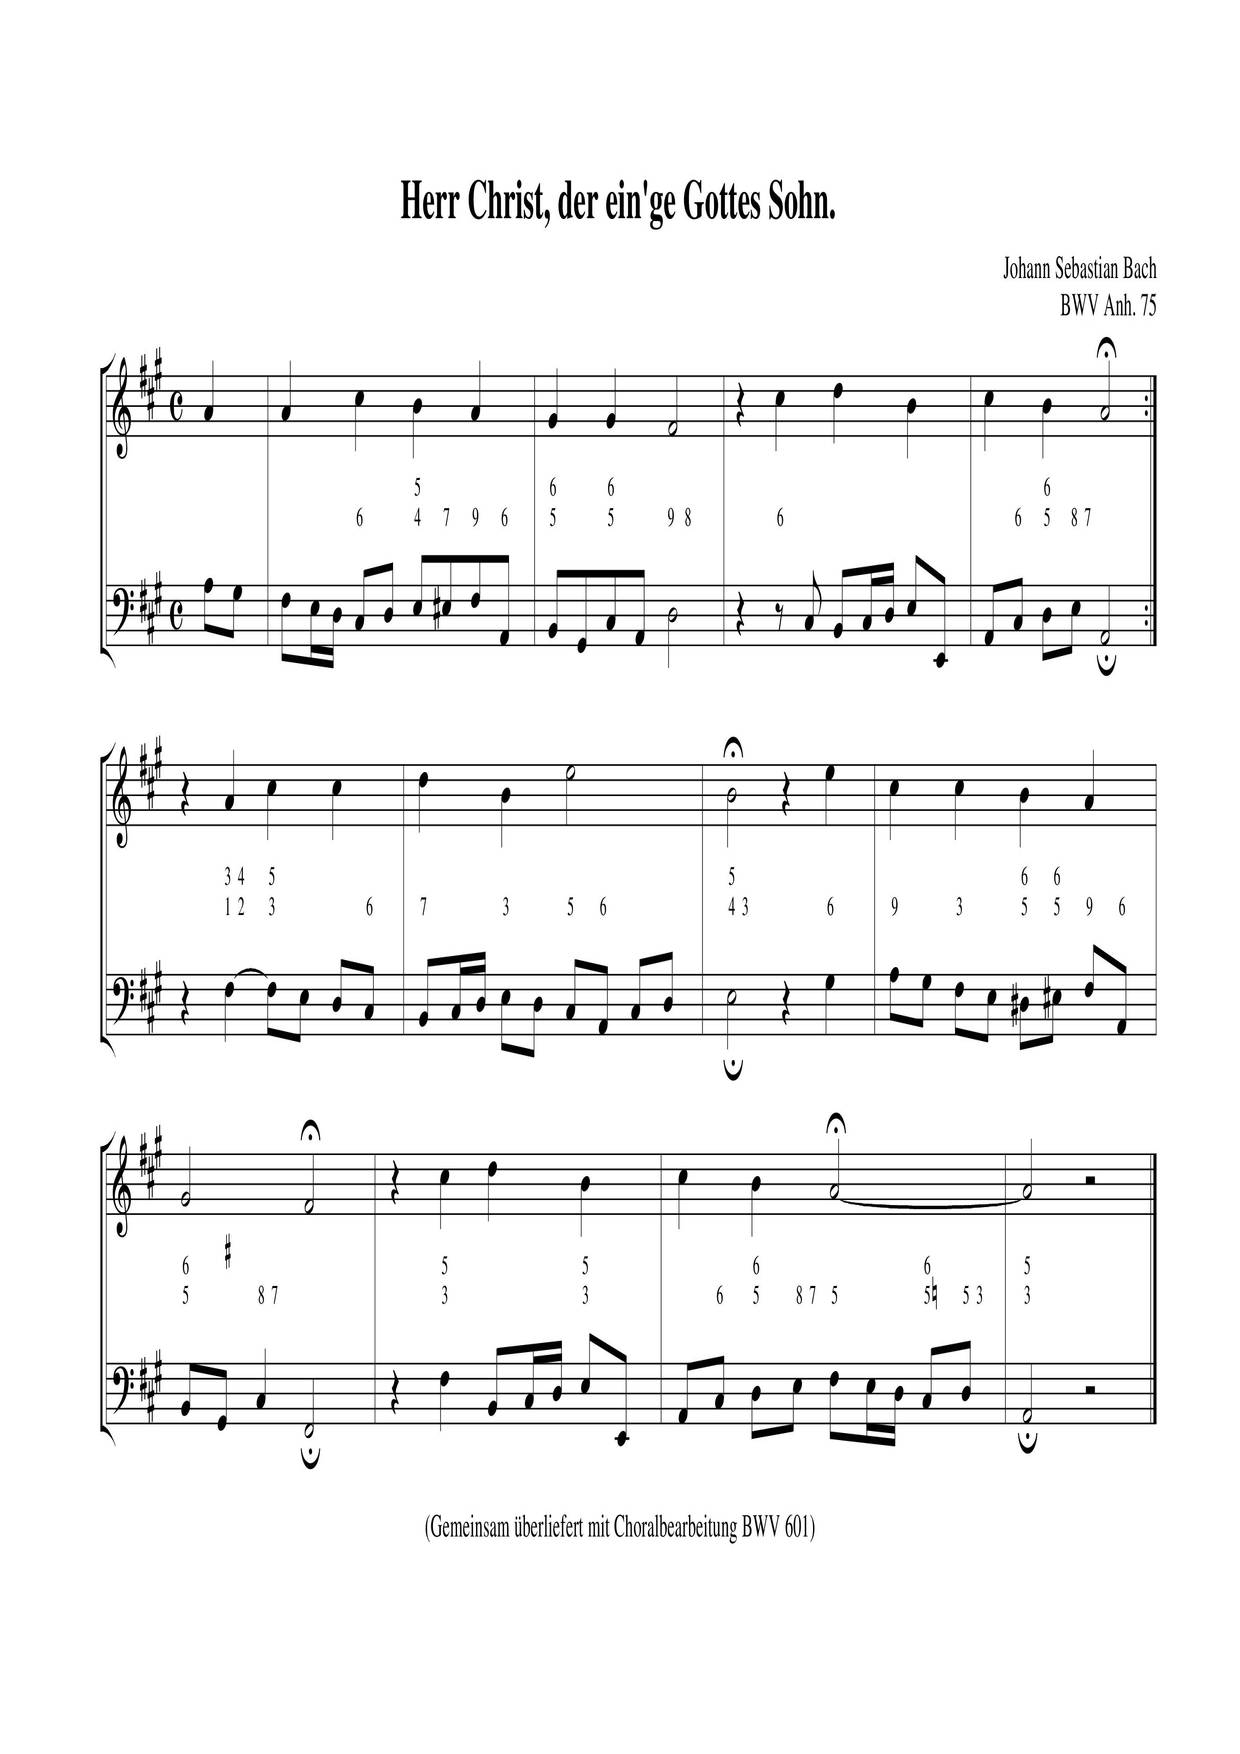 Herr Christ, Der Einge Gottessohn, BWV Anh. 75 Score